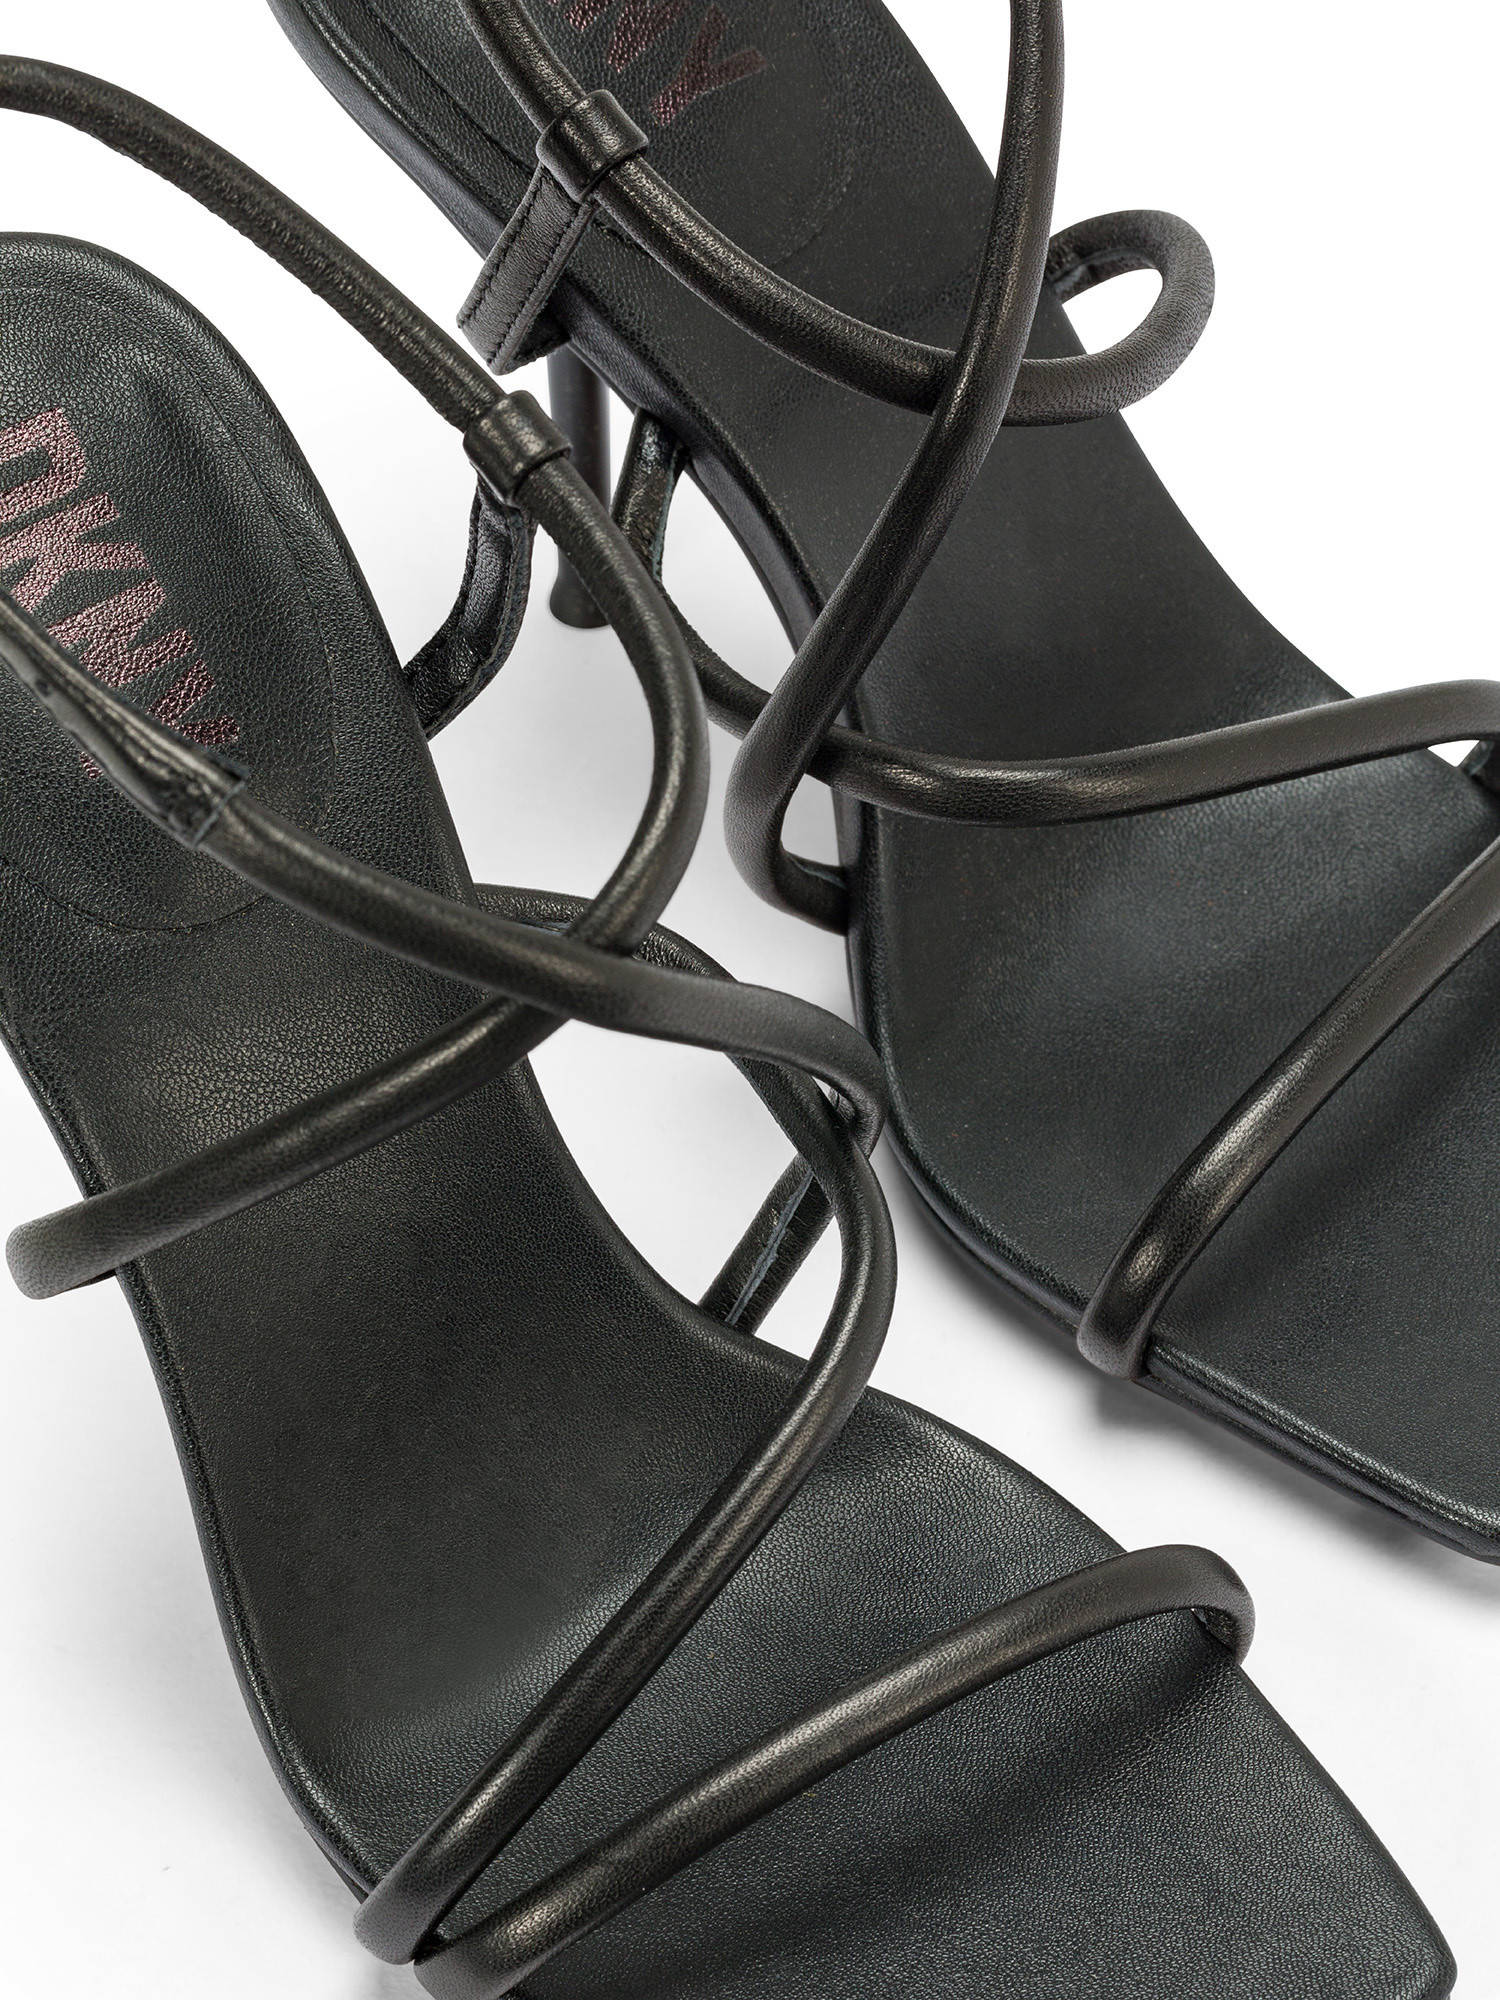 Dkny - Reia sandals with heel, Black, large image number 2